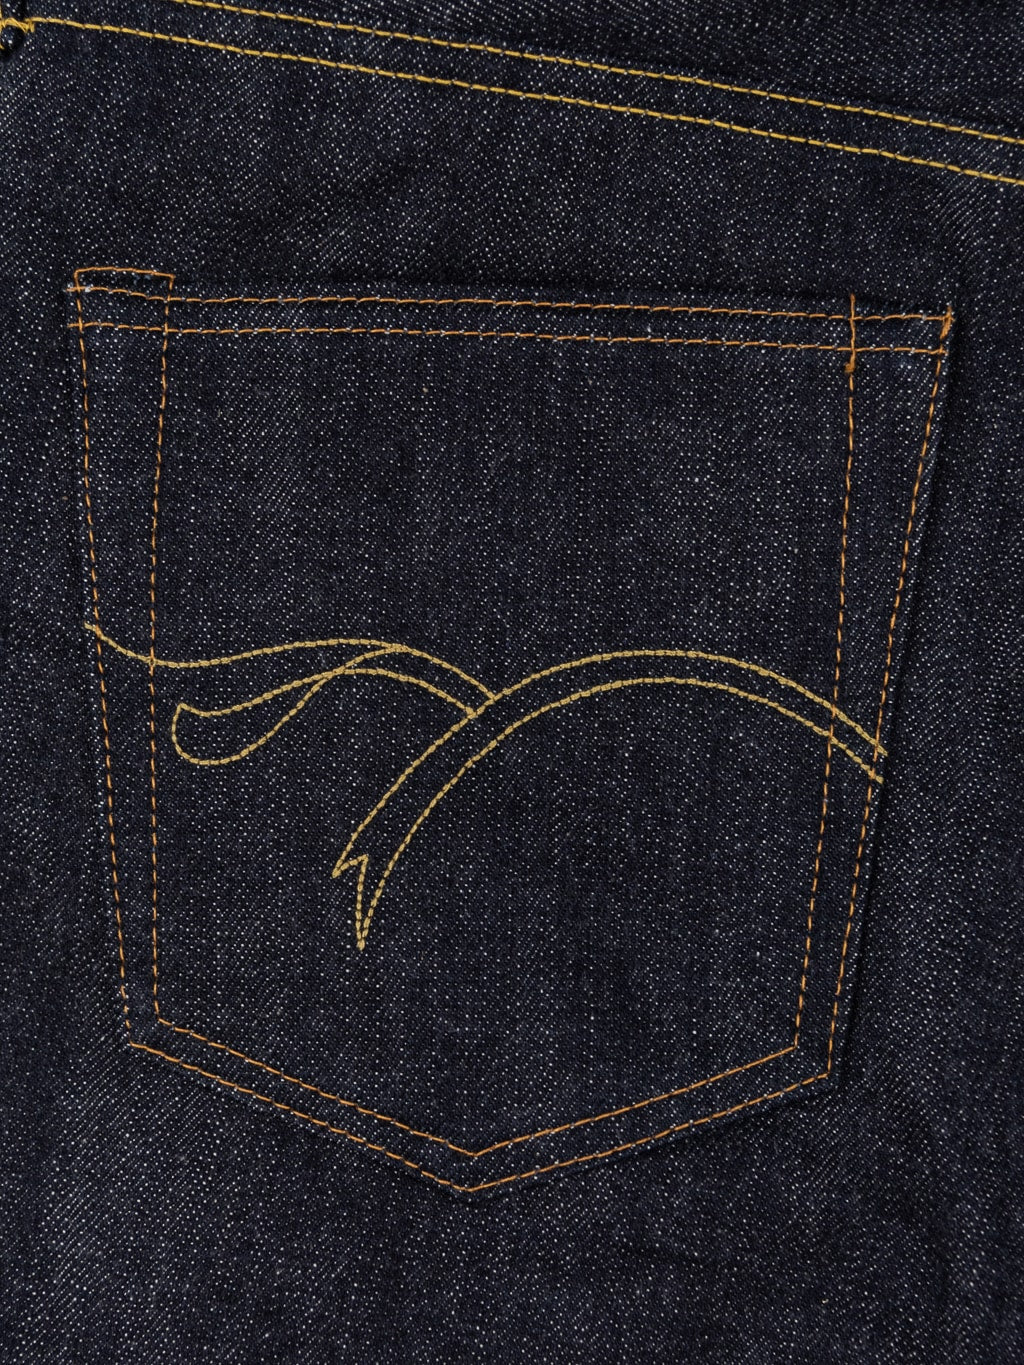 The Flat Head 3002 14.5oz Slim Tapered selvedge Jeans pocket detail